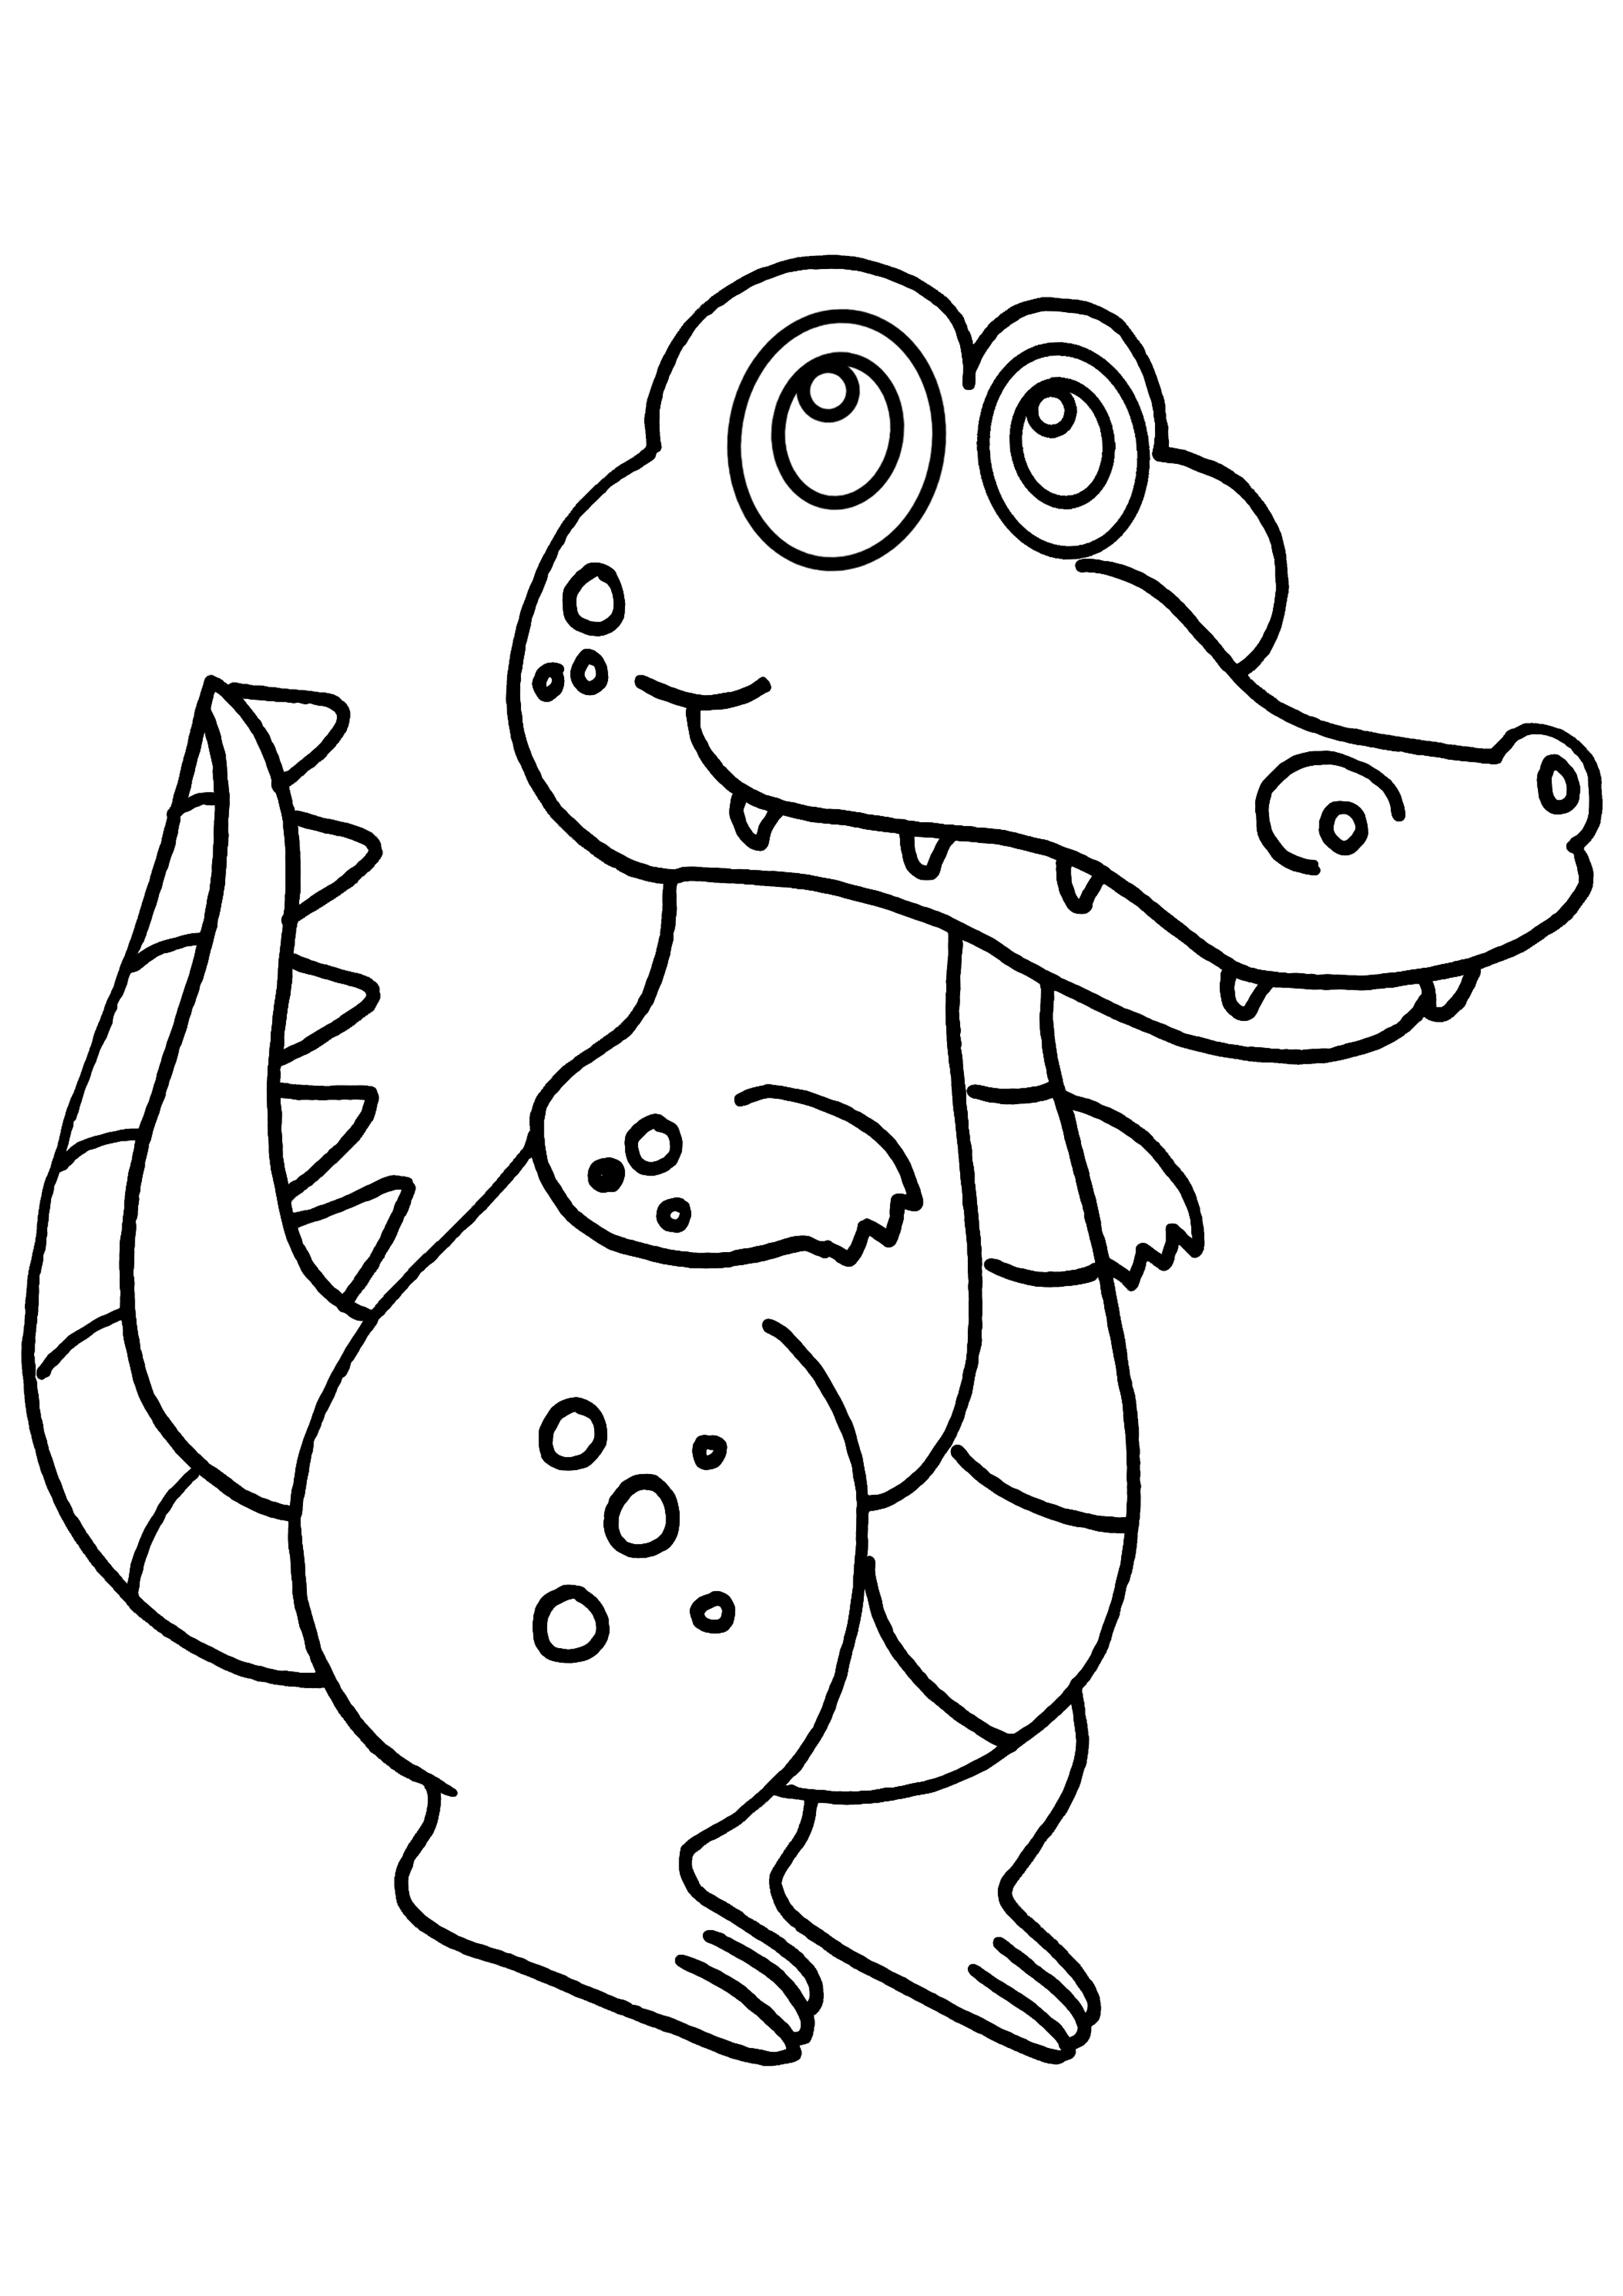 Funny Crocodile coloring page